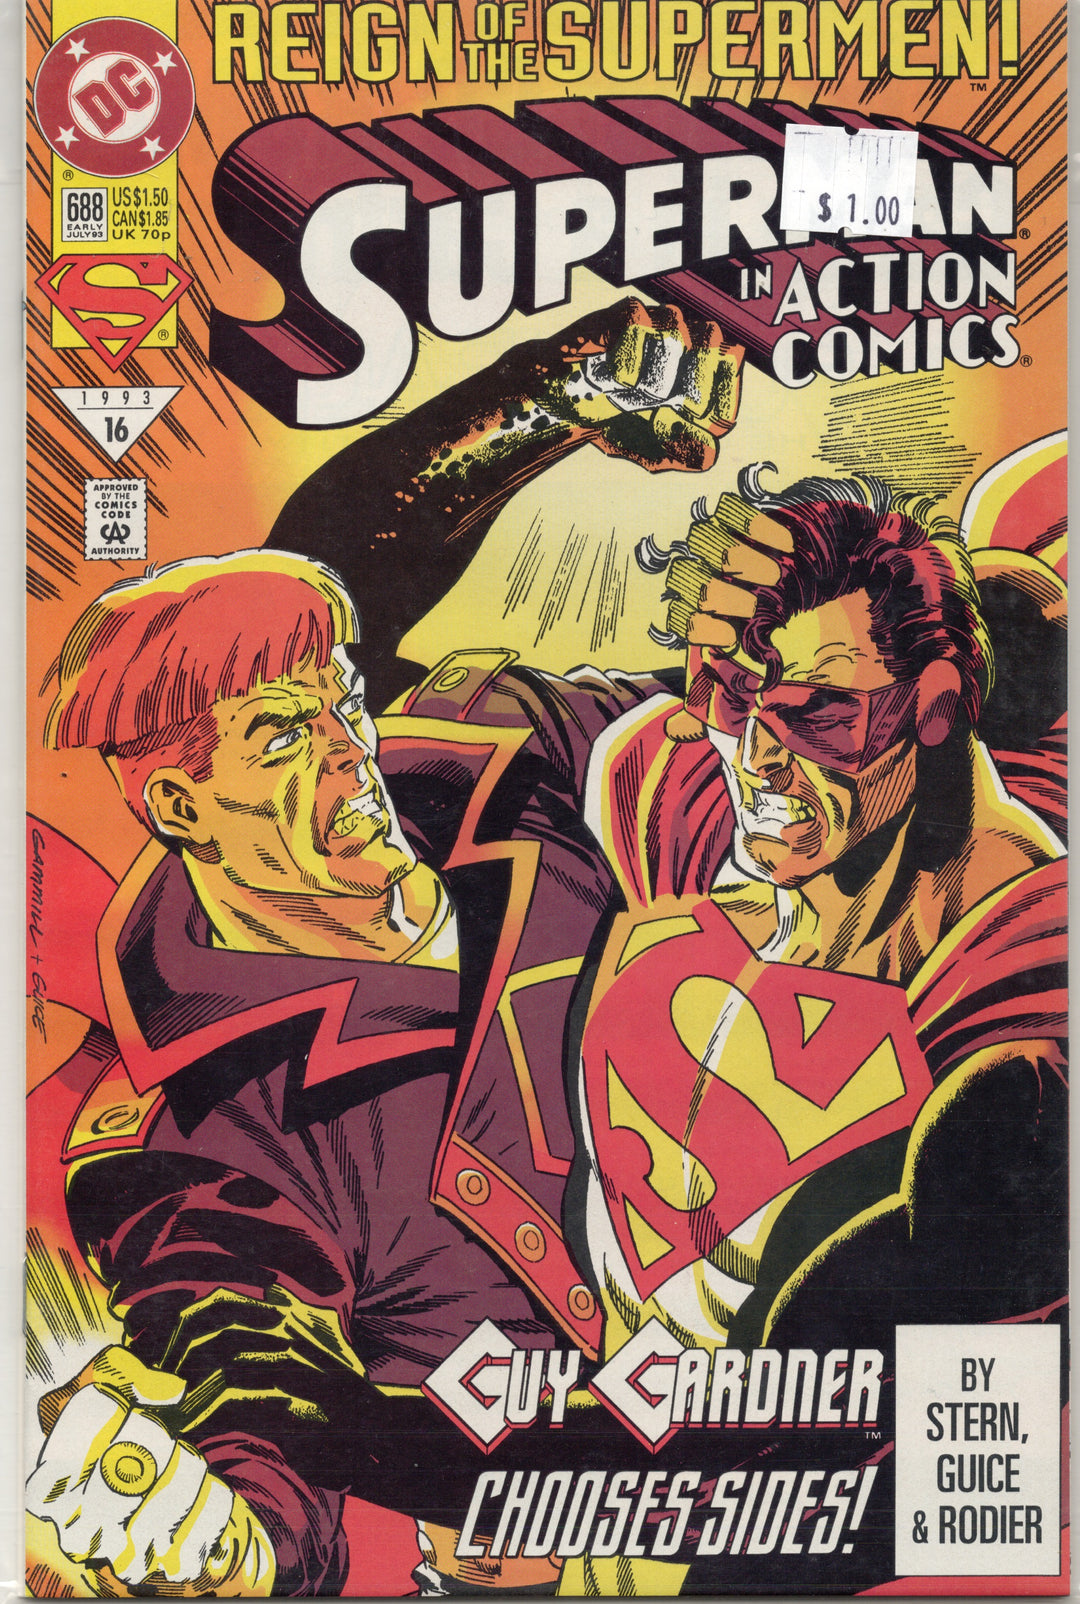 Superman Action Comics #688